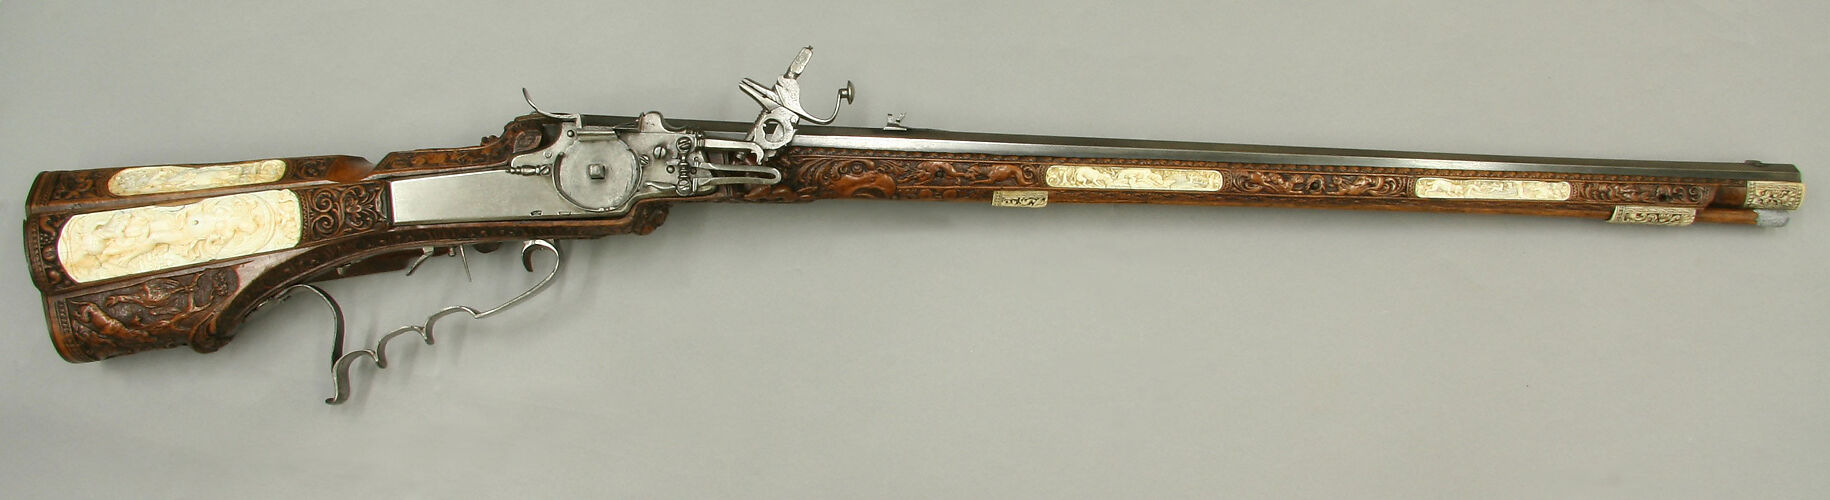 Wheellock Rifle Made for Emperor Leopold I